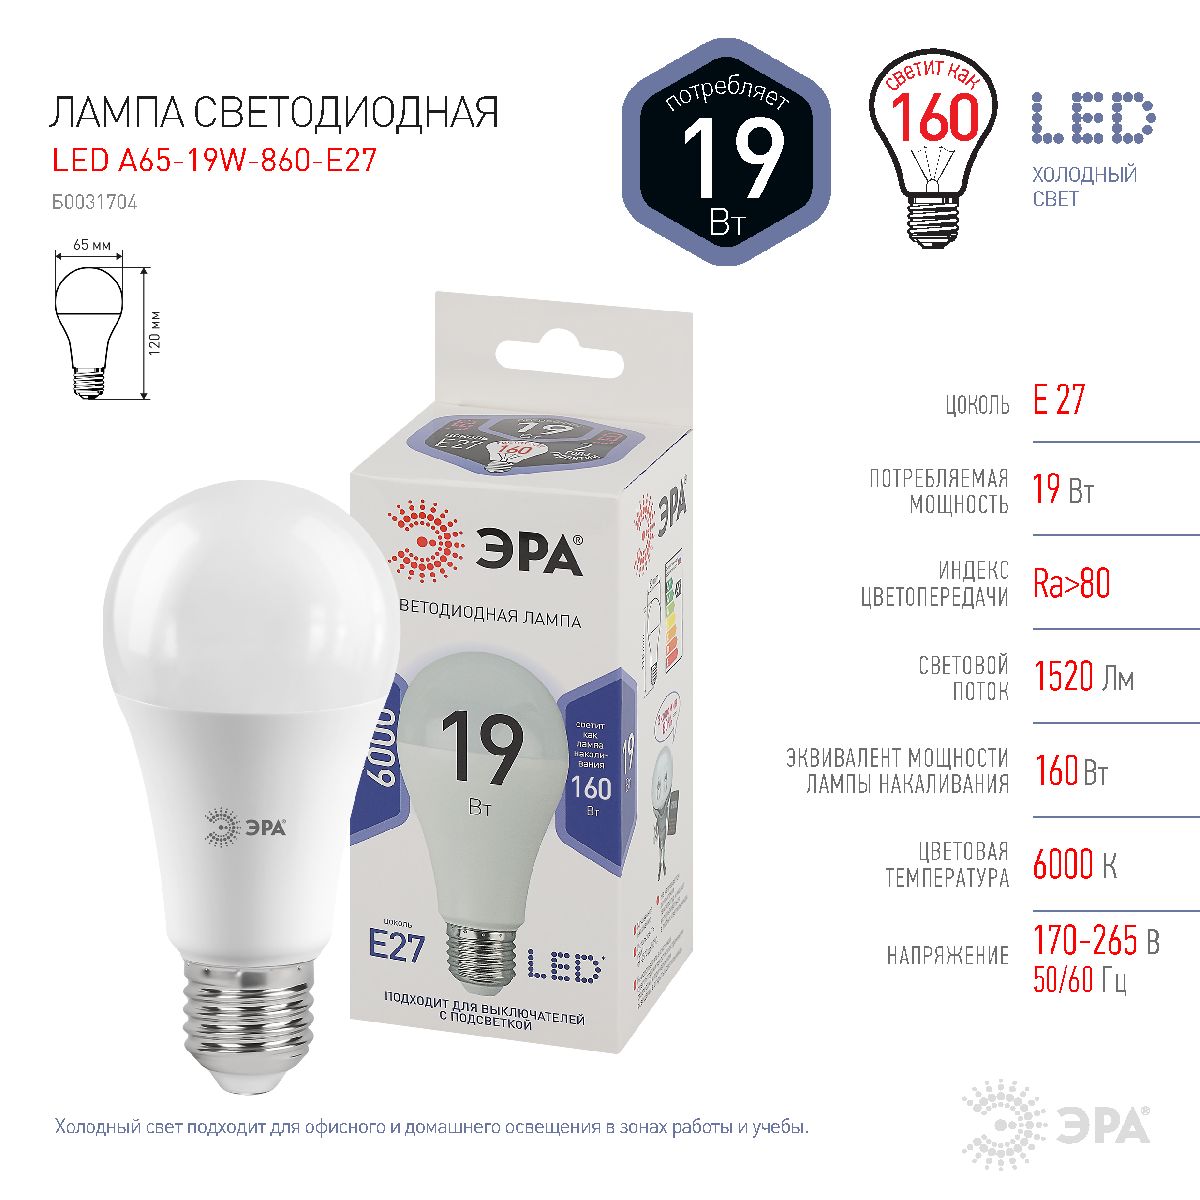 Лампа светодиодная Эра E27 19W 6000K LED A65-19W-860-E27 Б0031704